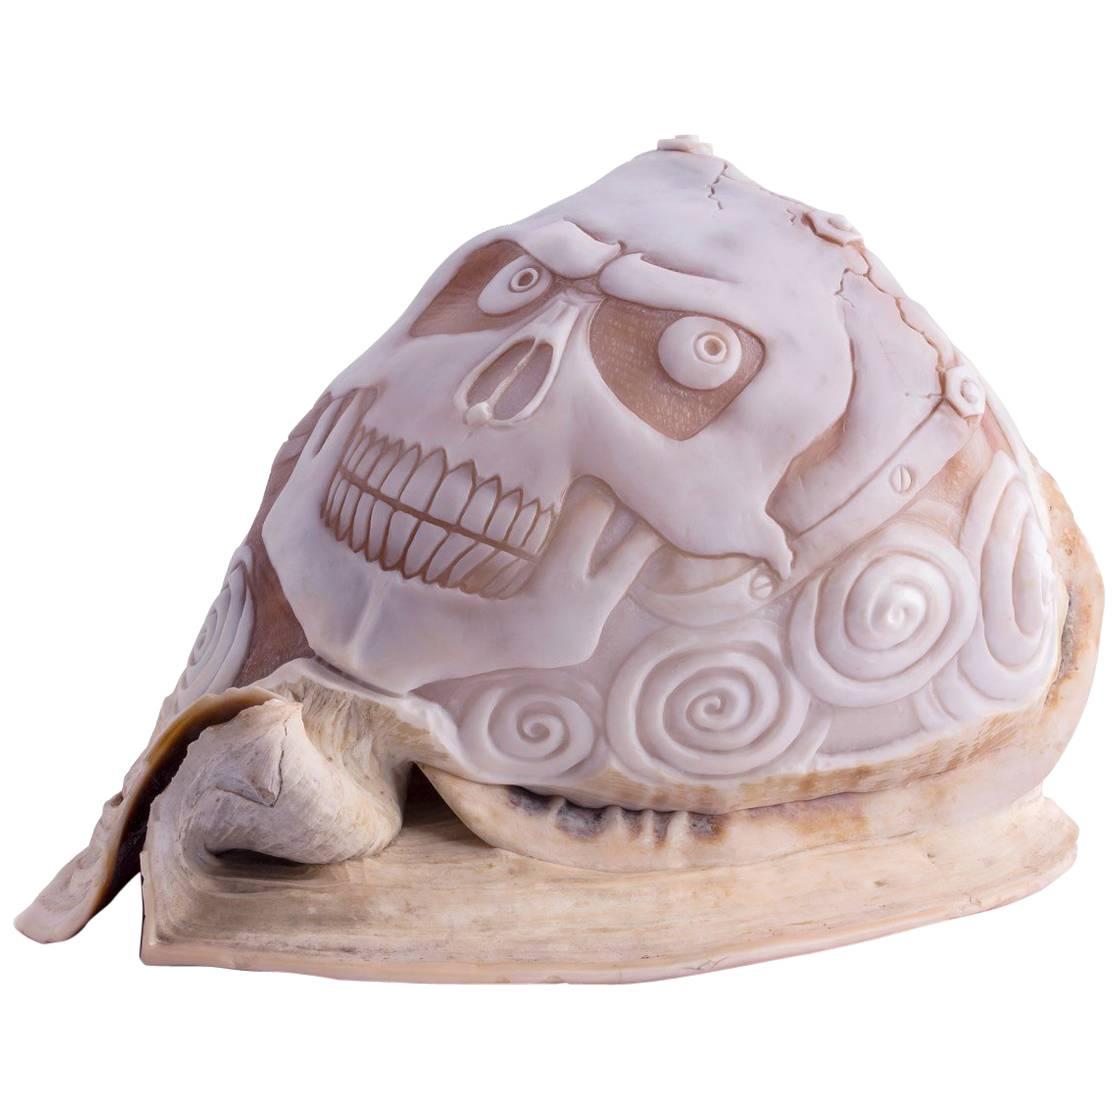 Amedeo Teschio One of a Kind Hand-Carved Sardonyx Shell For Sale